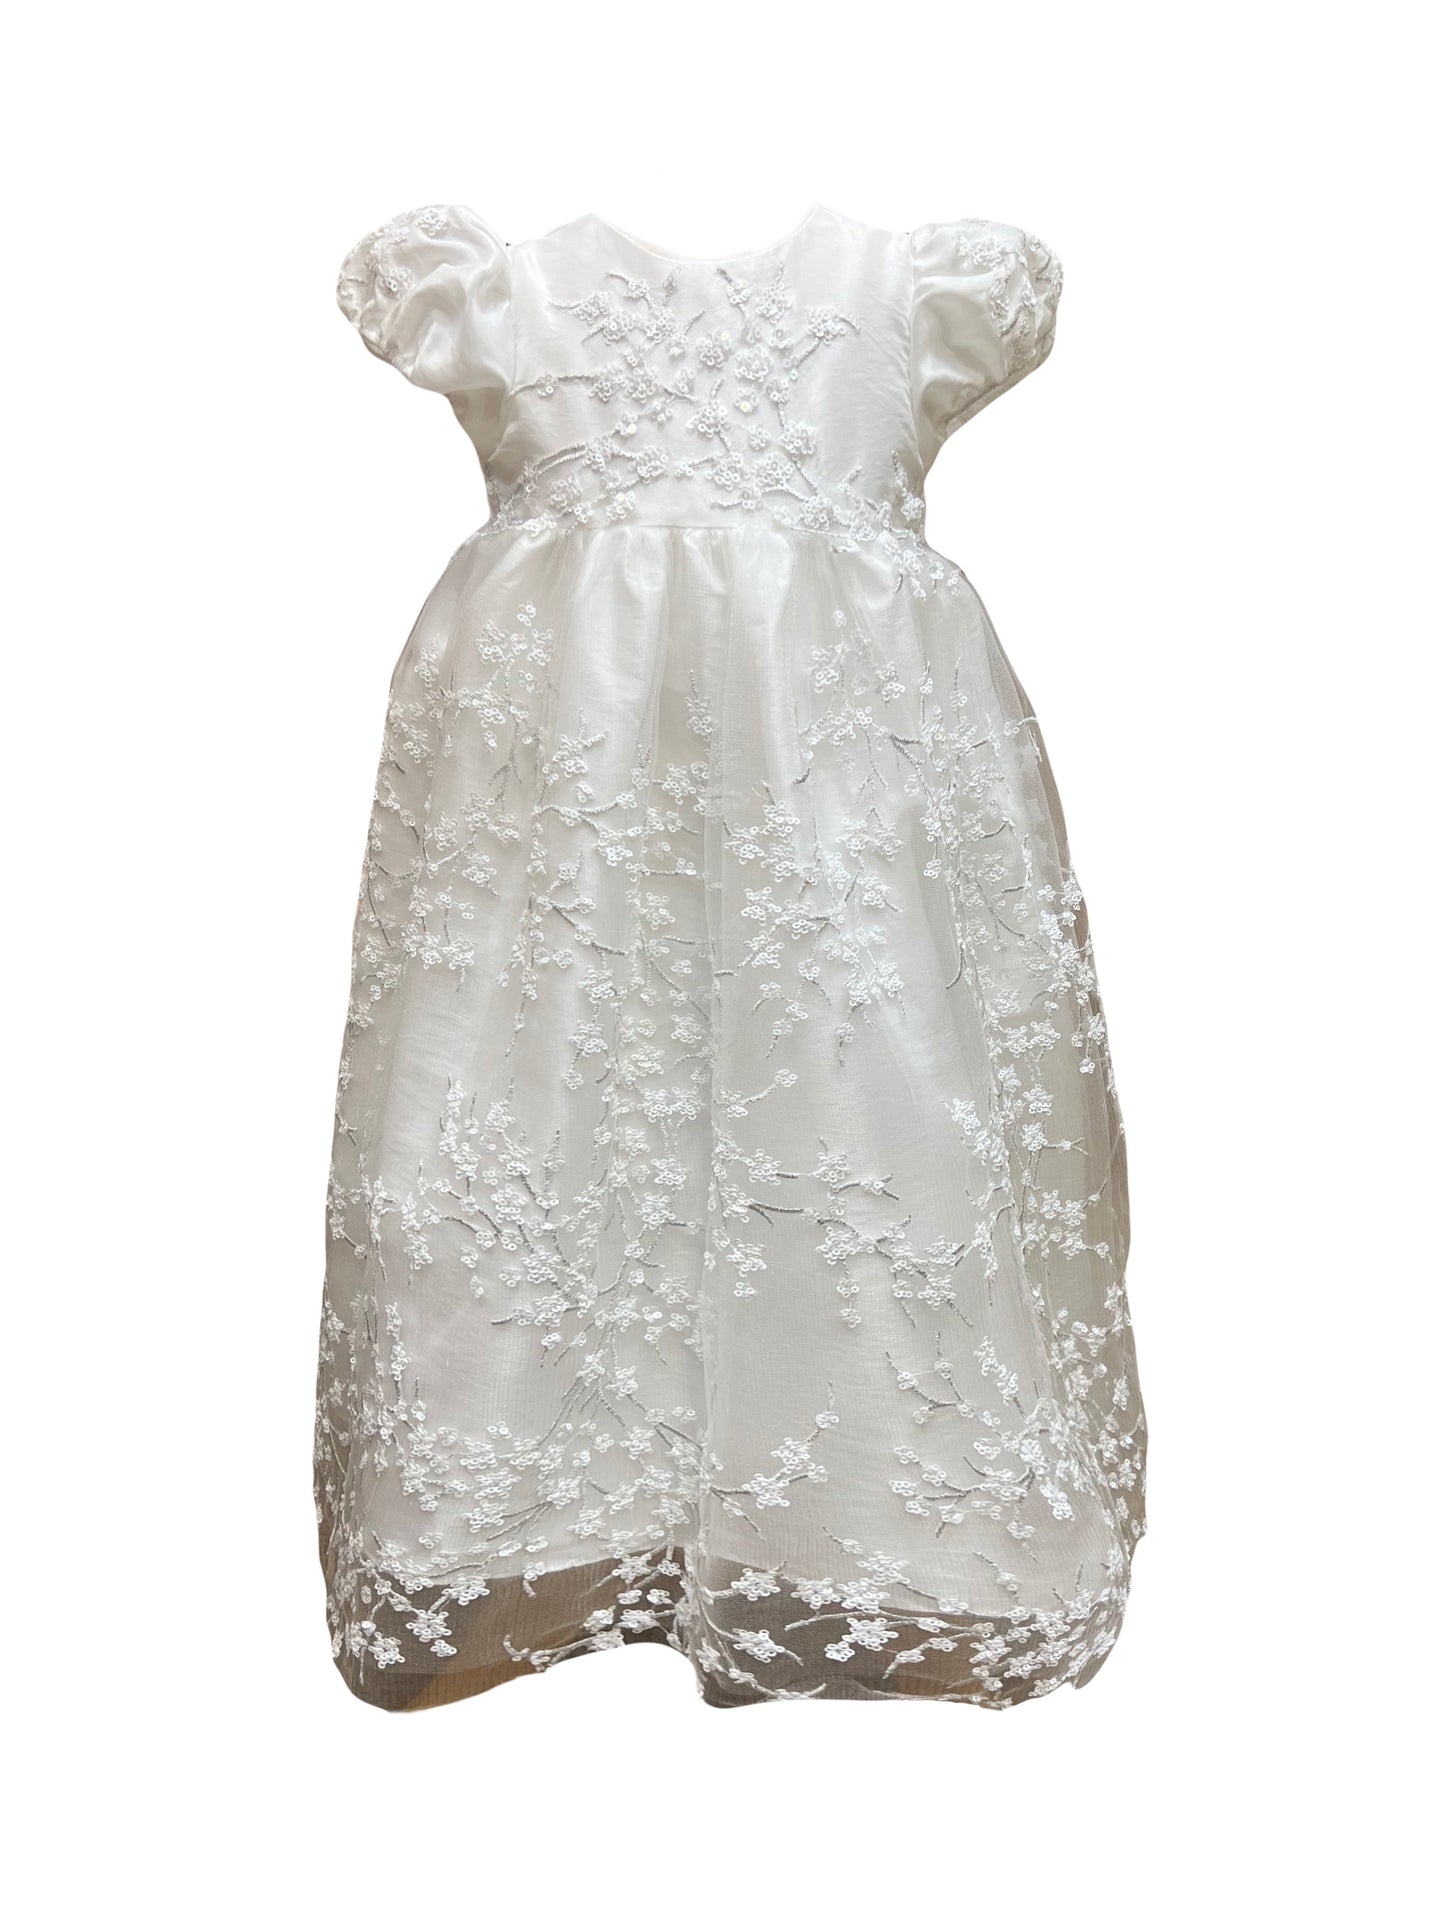 Ivory & White Cherry Blossom dress